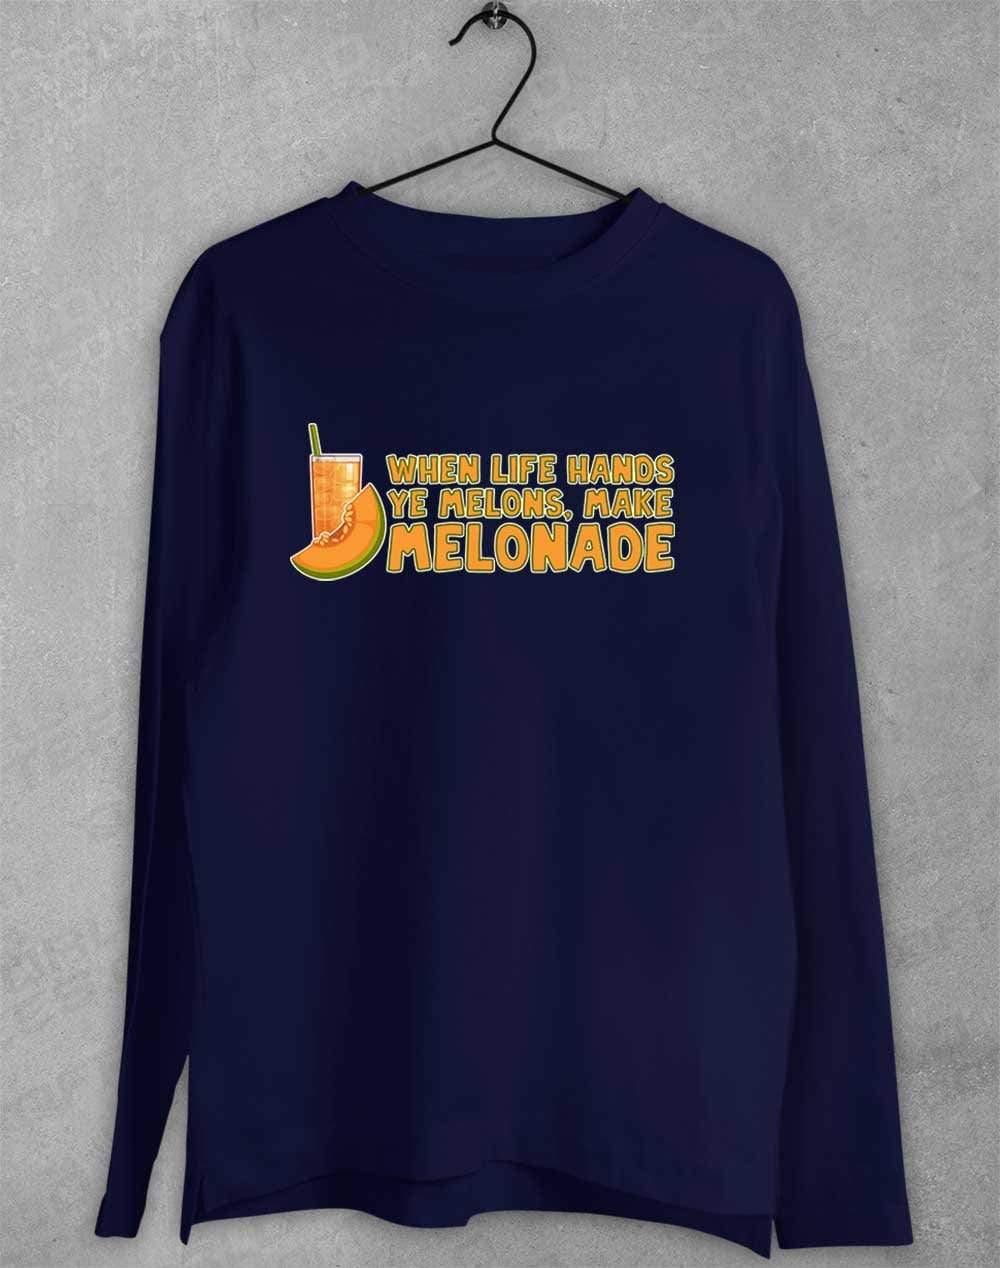 Make Melonade Long Sleeve T-Shirt S / Navy  - Off World Tees